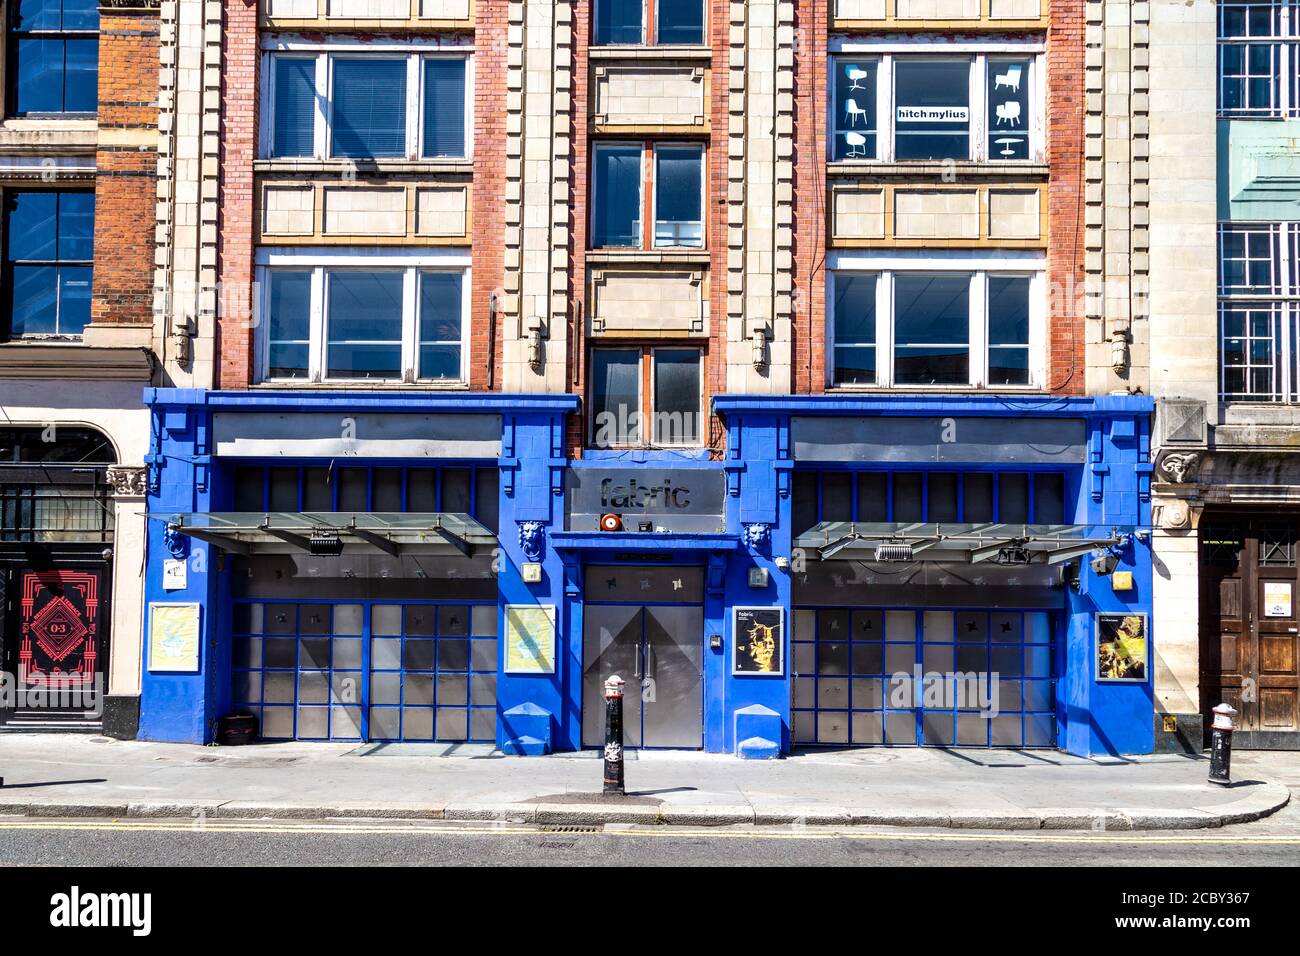 Exterior of Fabrick nightclub, Farringdon, London, UK Stock Photo